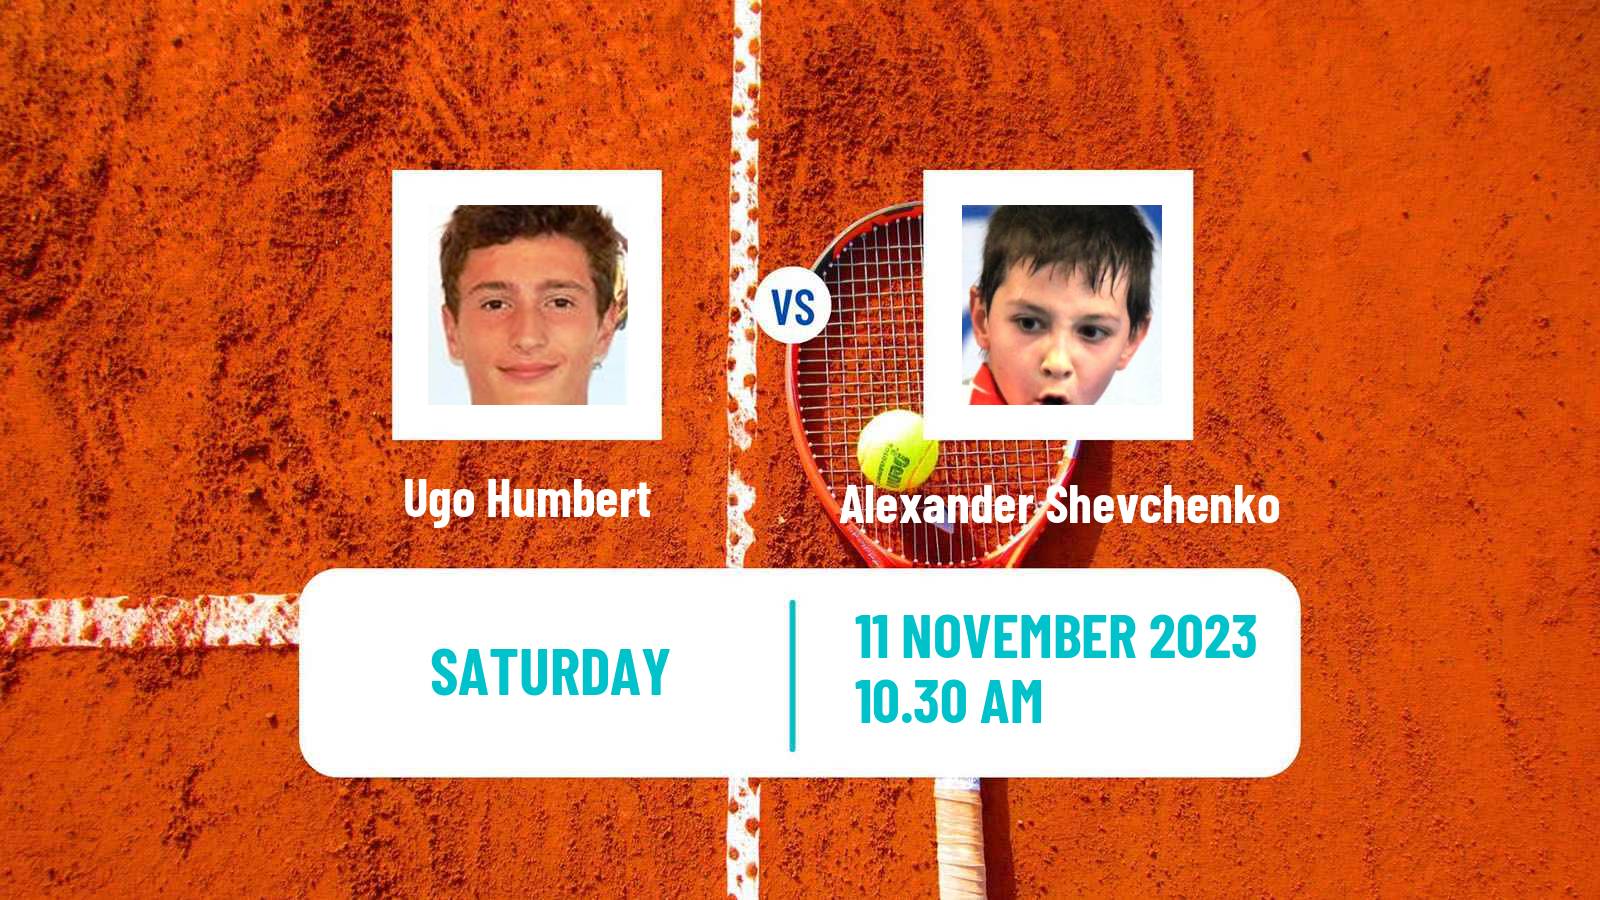 Tennis ATP Metz Ugo Humbert - Alexander Shevchenko